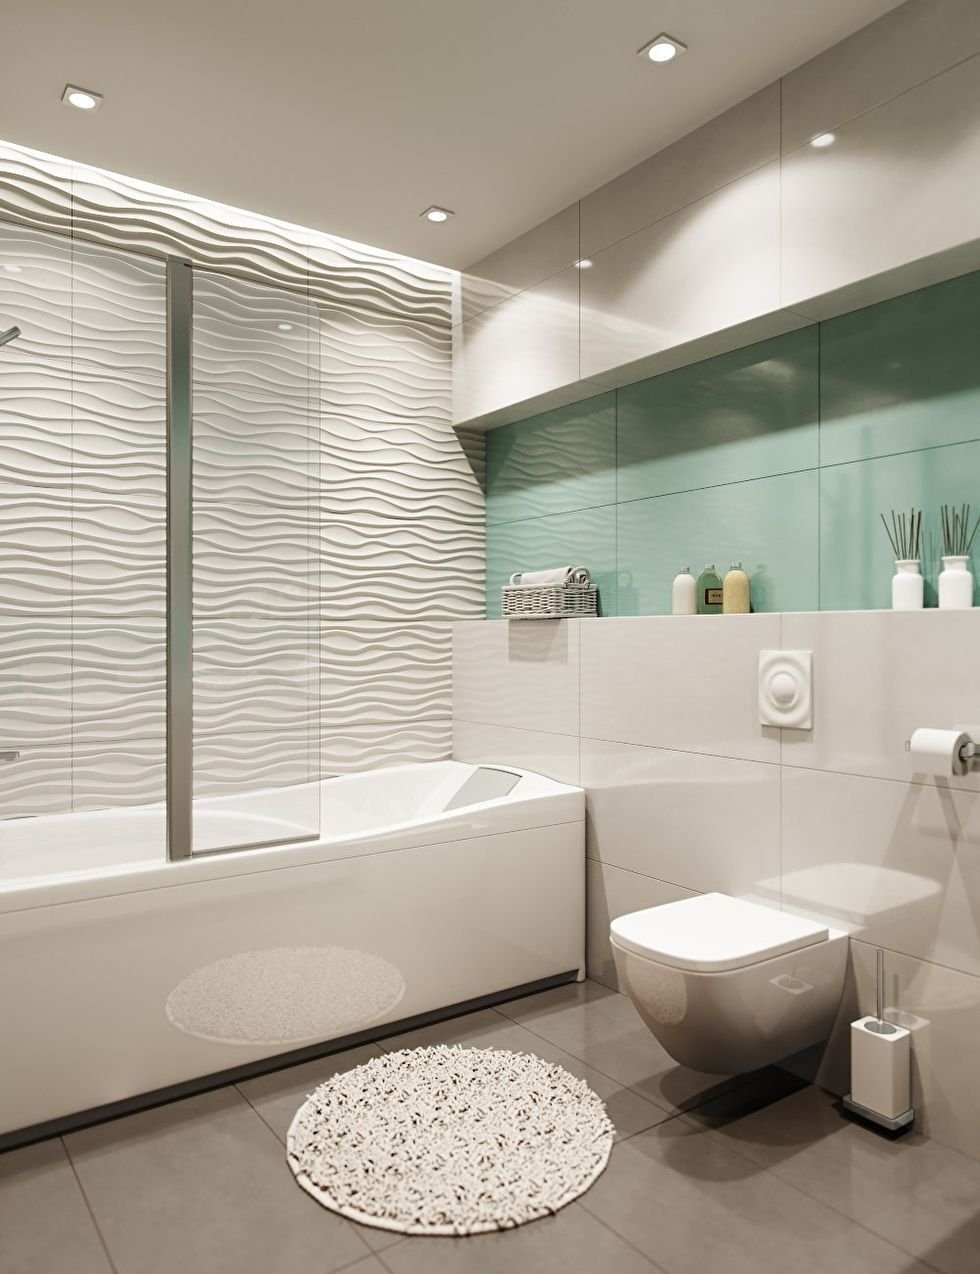 Светлая современная ванная комната. Стильная ванная. Ванна в современном стиле. Стильные Ванные комнаты. Ванная комната в современном стиле.